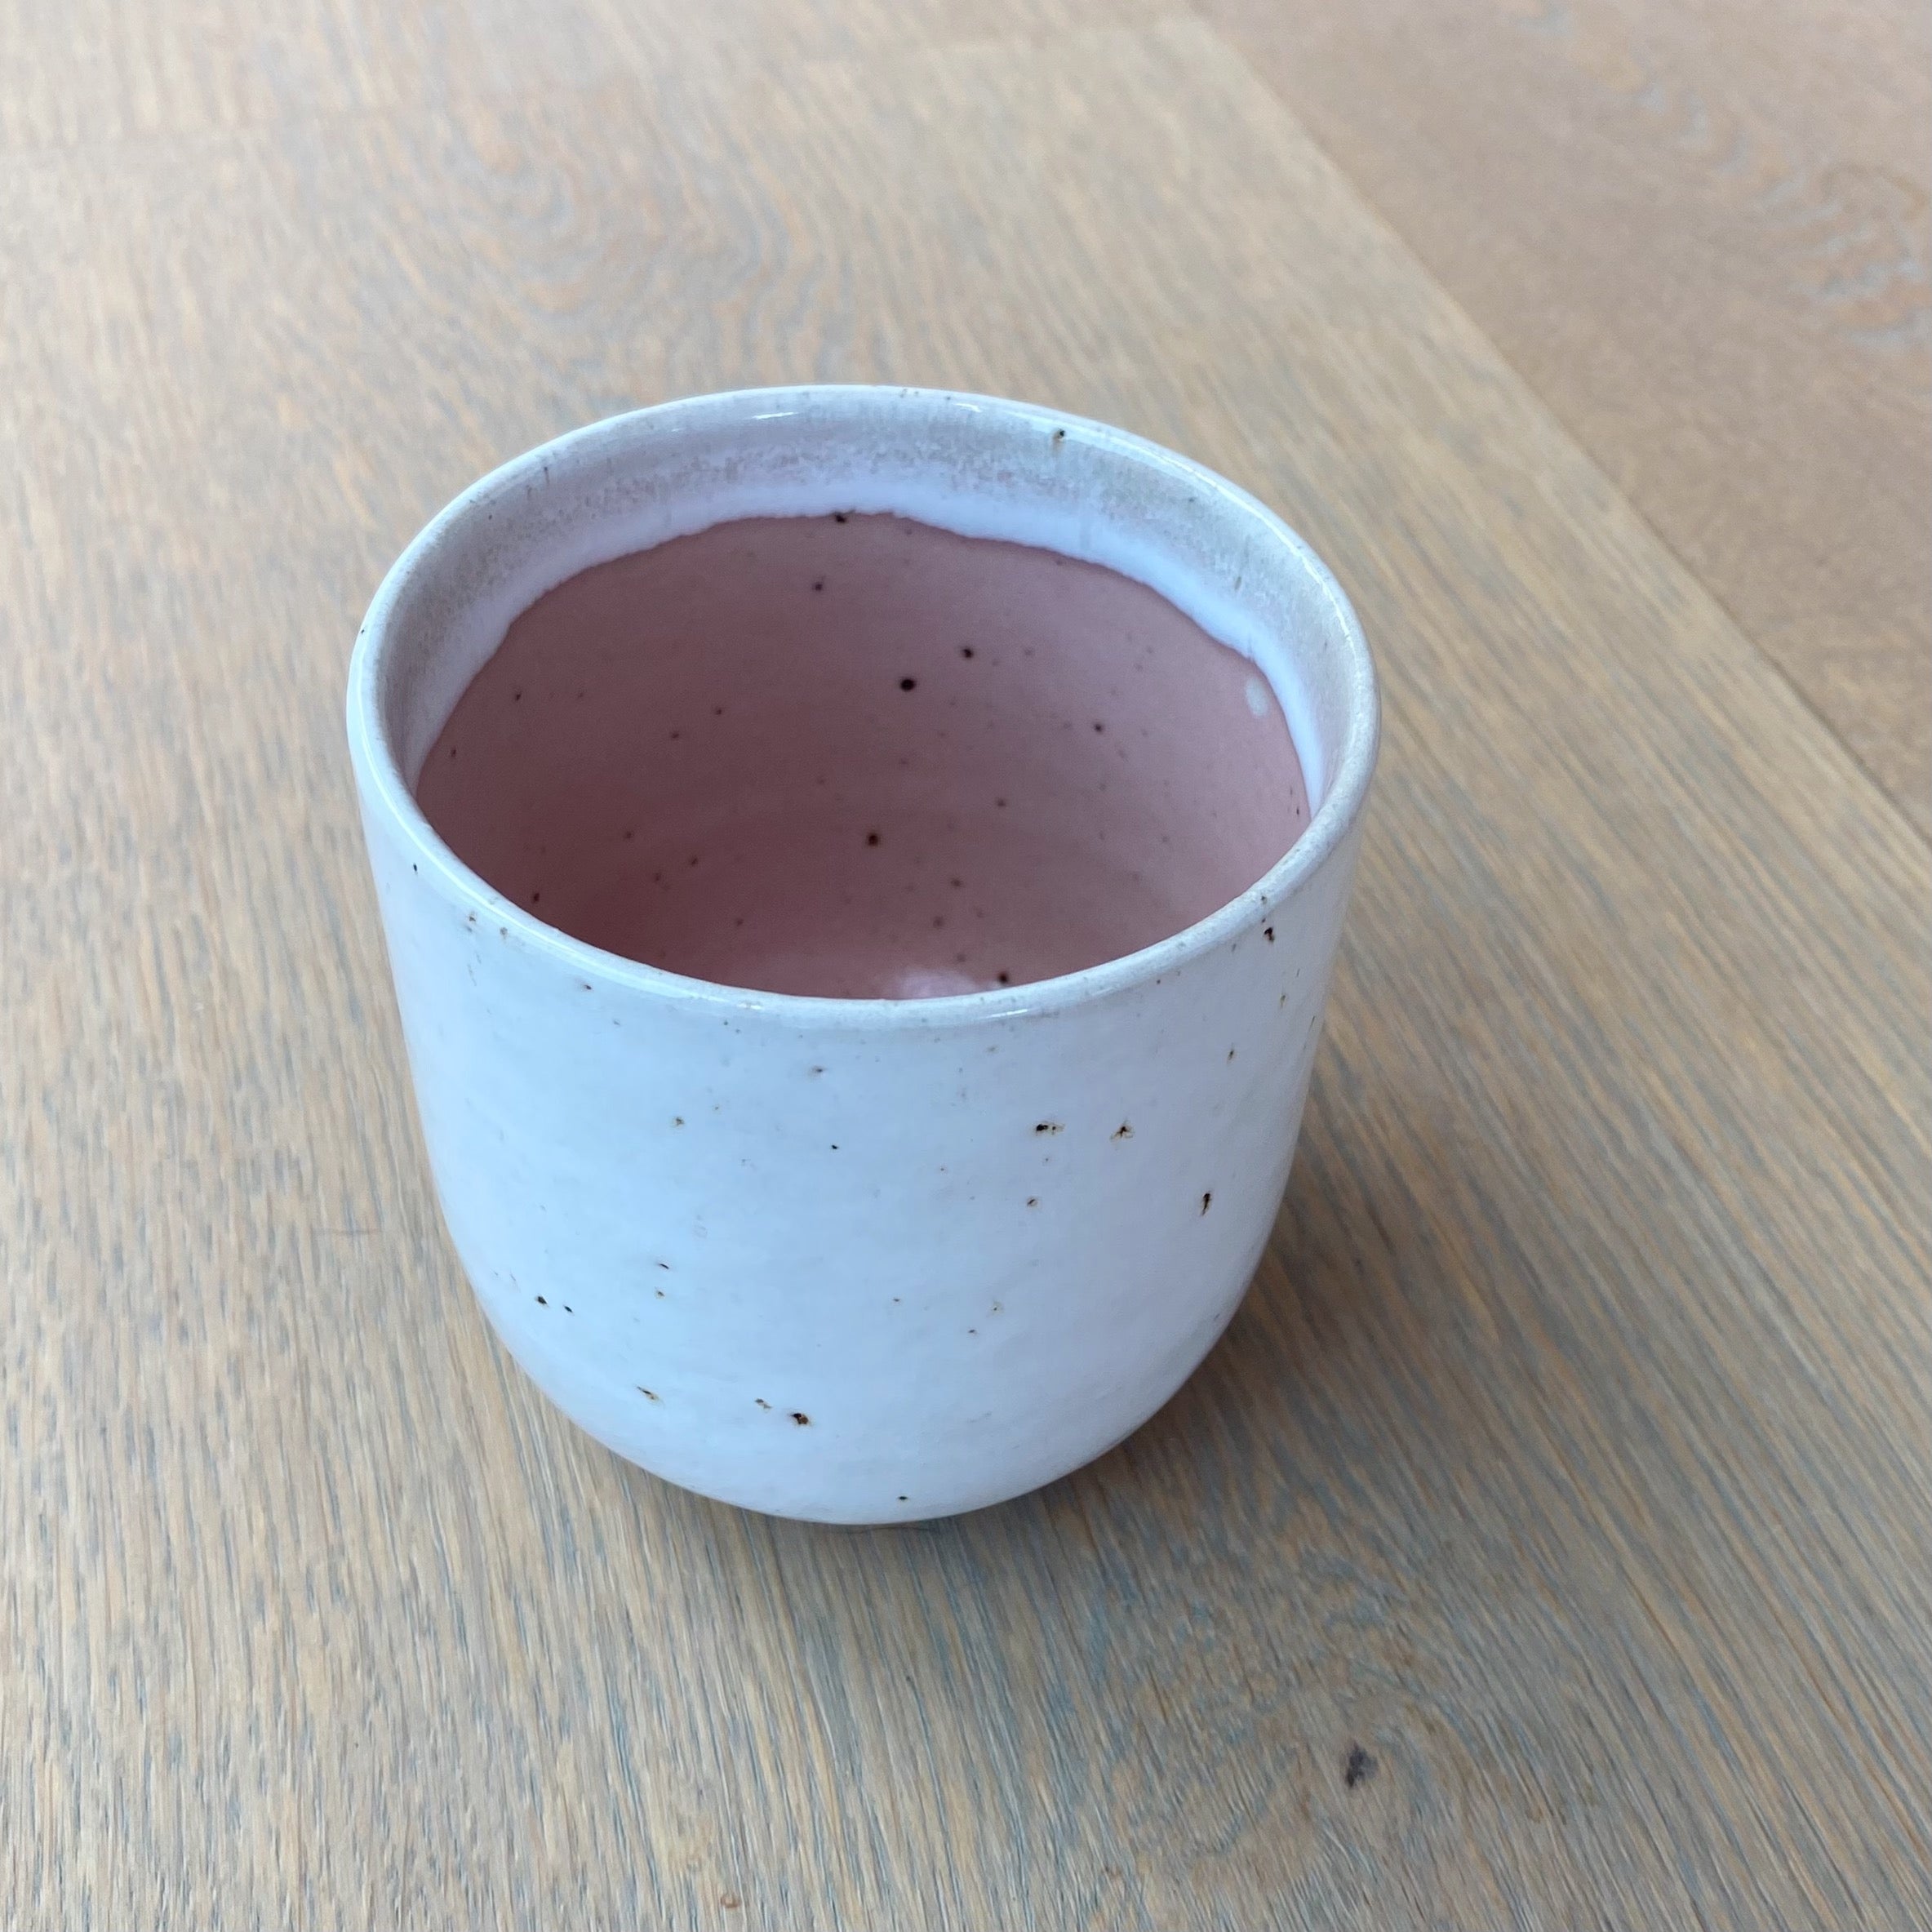 Tasja P kaffekop - off white og lyserød